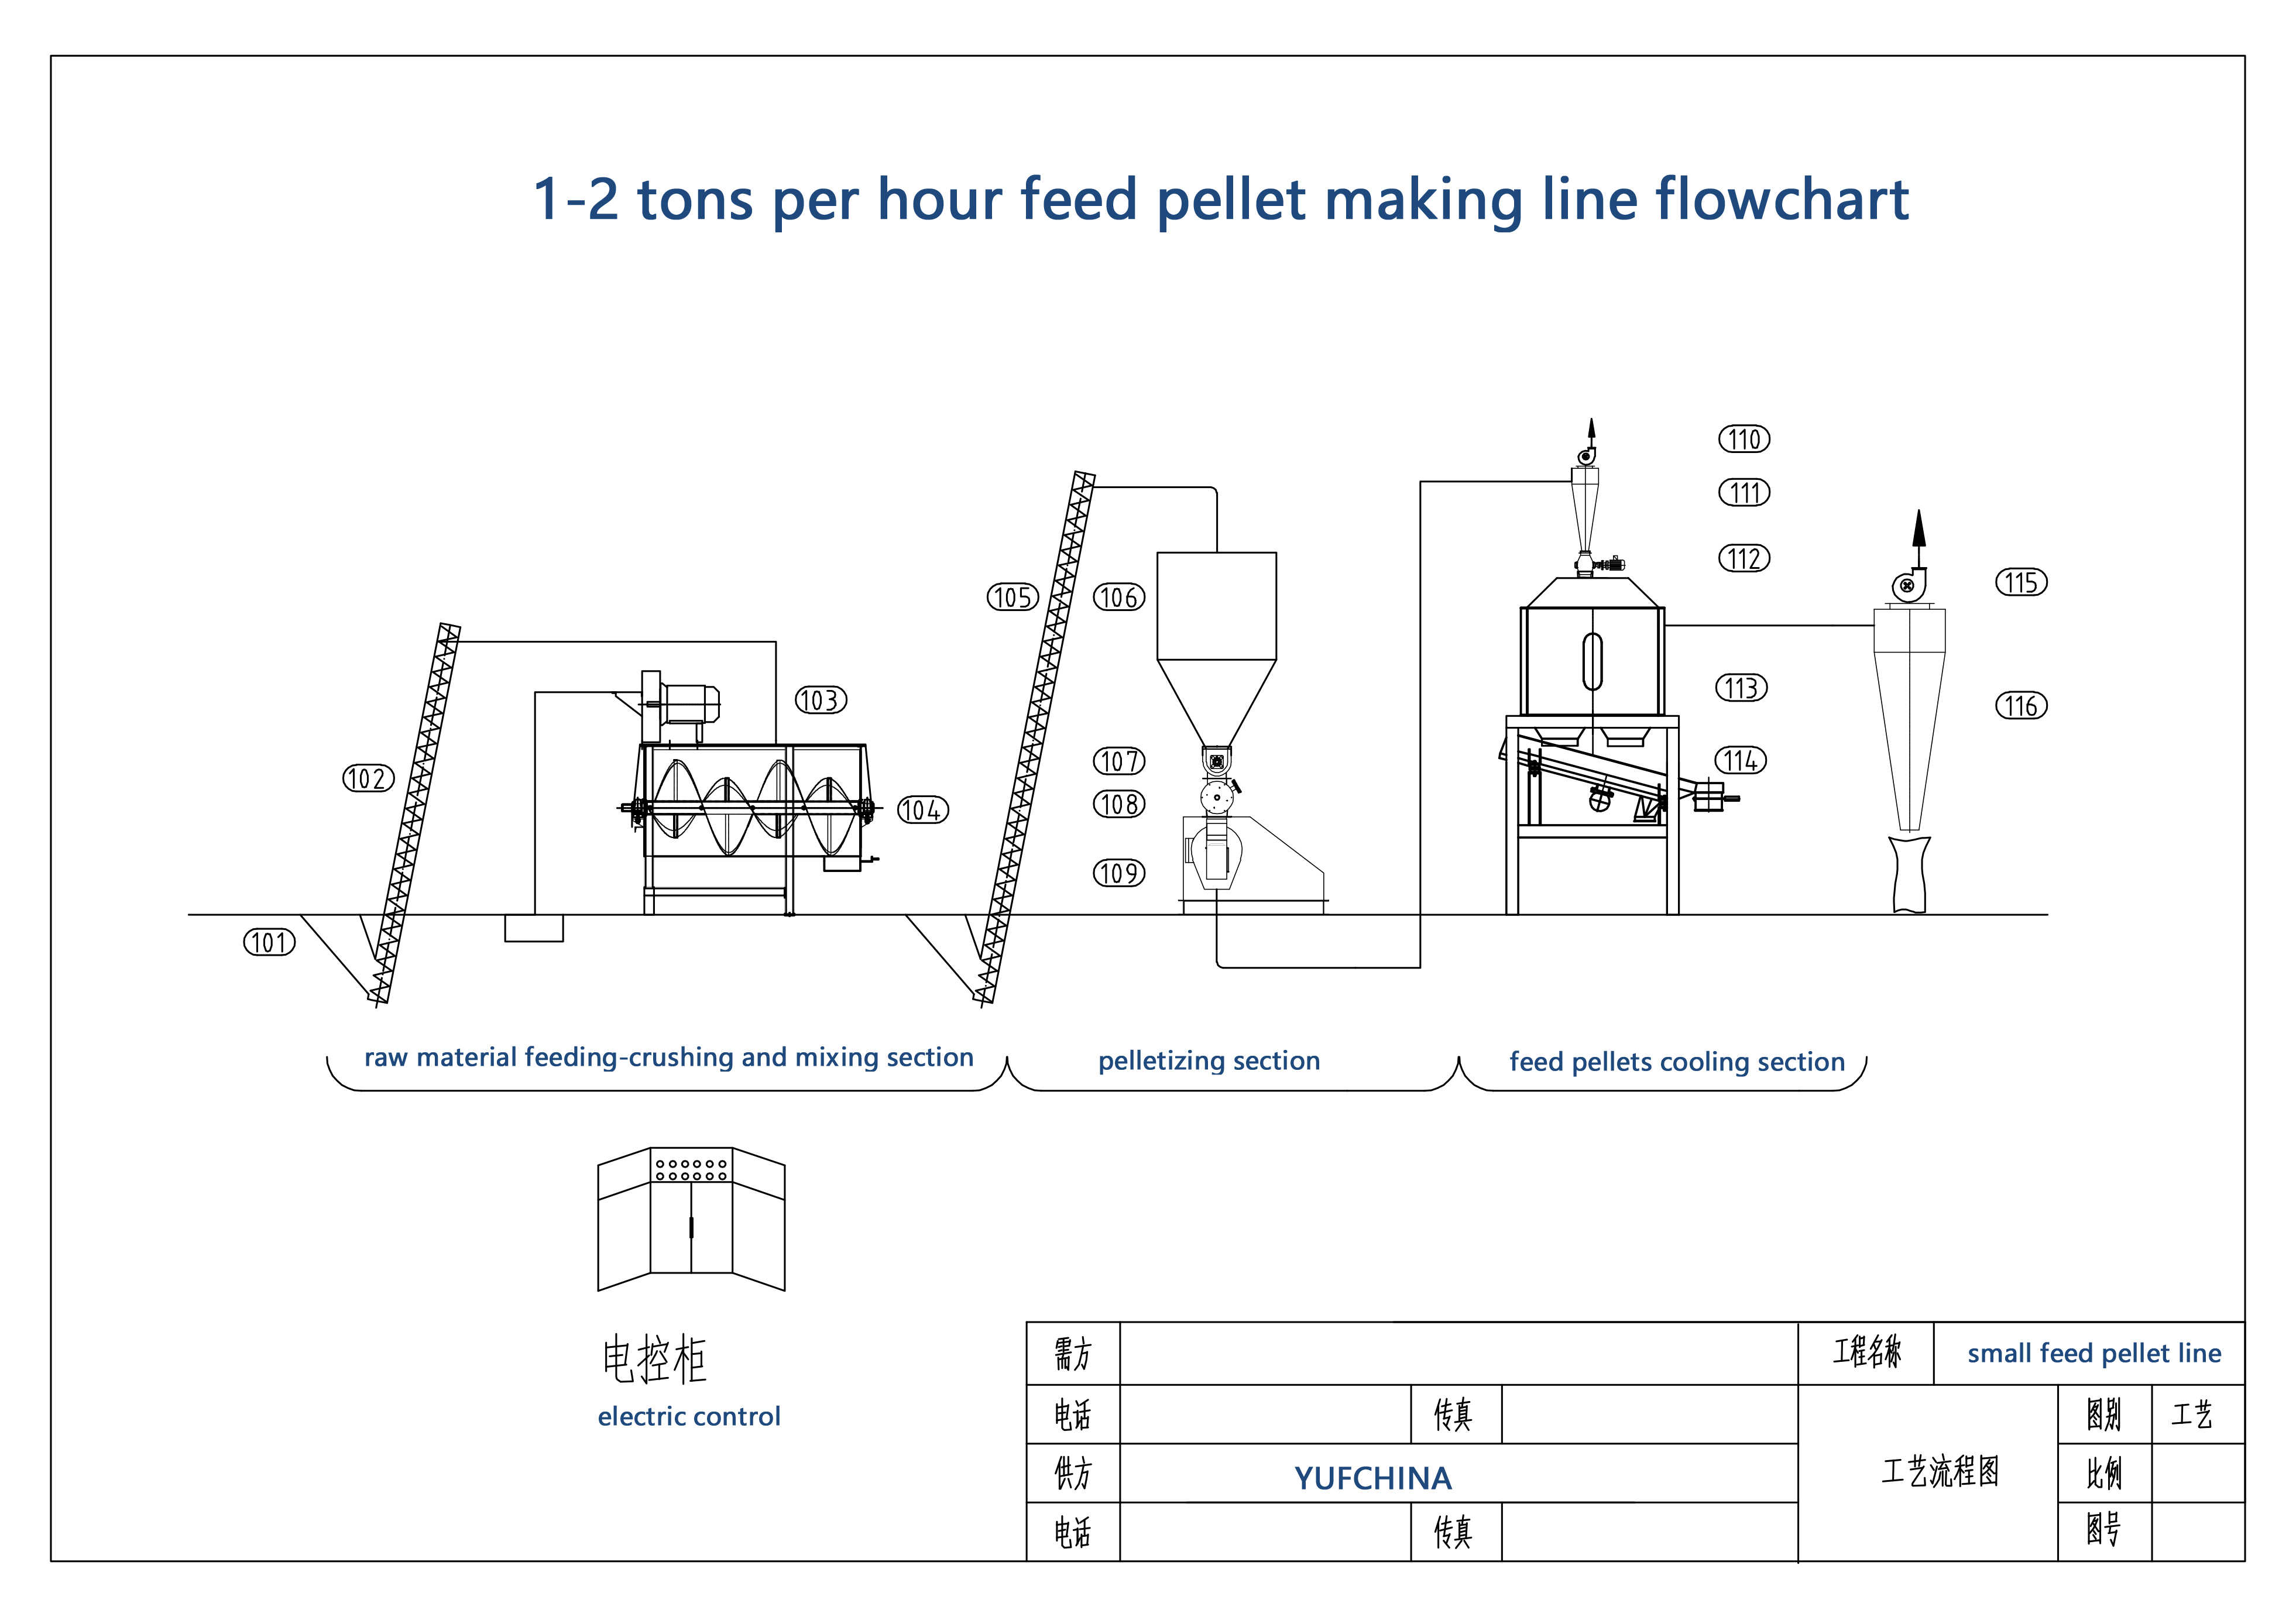 1-2 tons per hour feed pellet making line flowchart